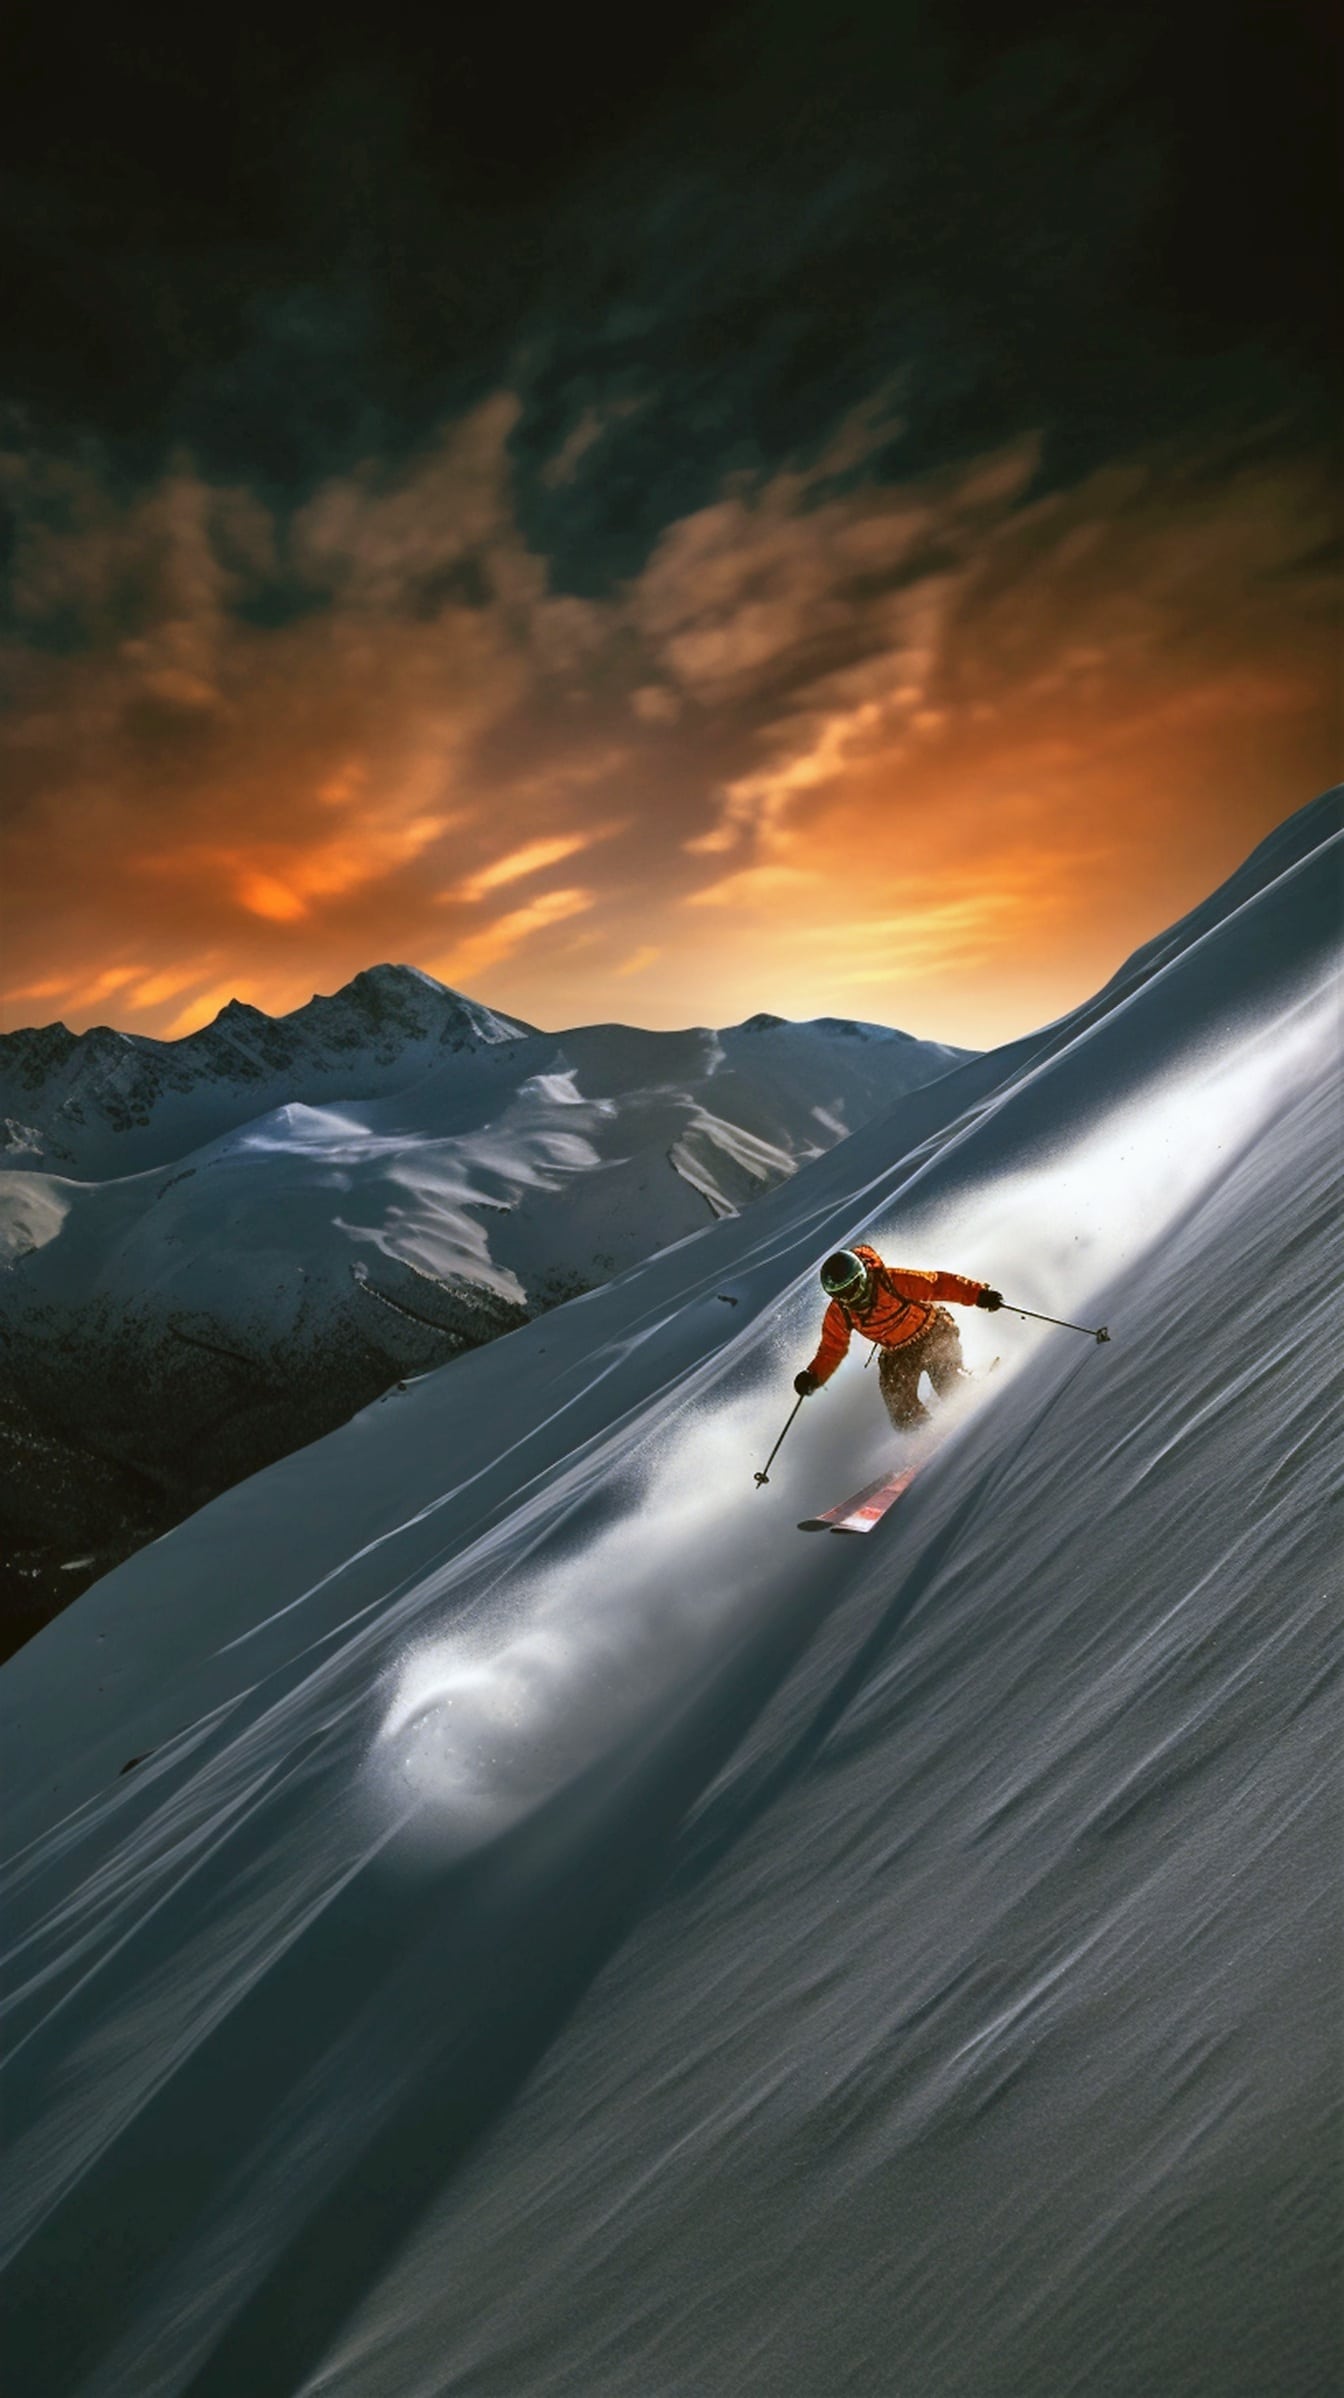 Extreme skier σκι σε χιονισμένη πλαγιά σε μαγευτικό ηλιοβασίλεμα